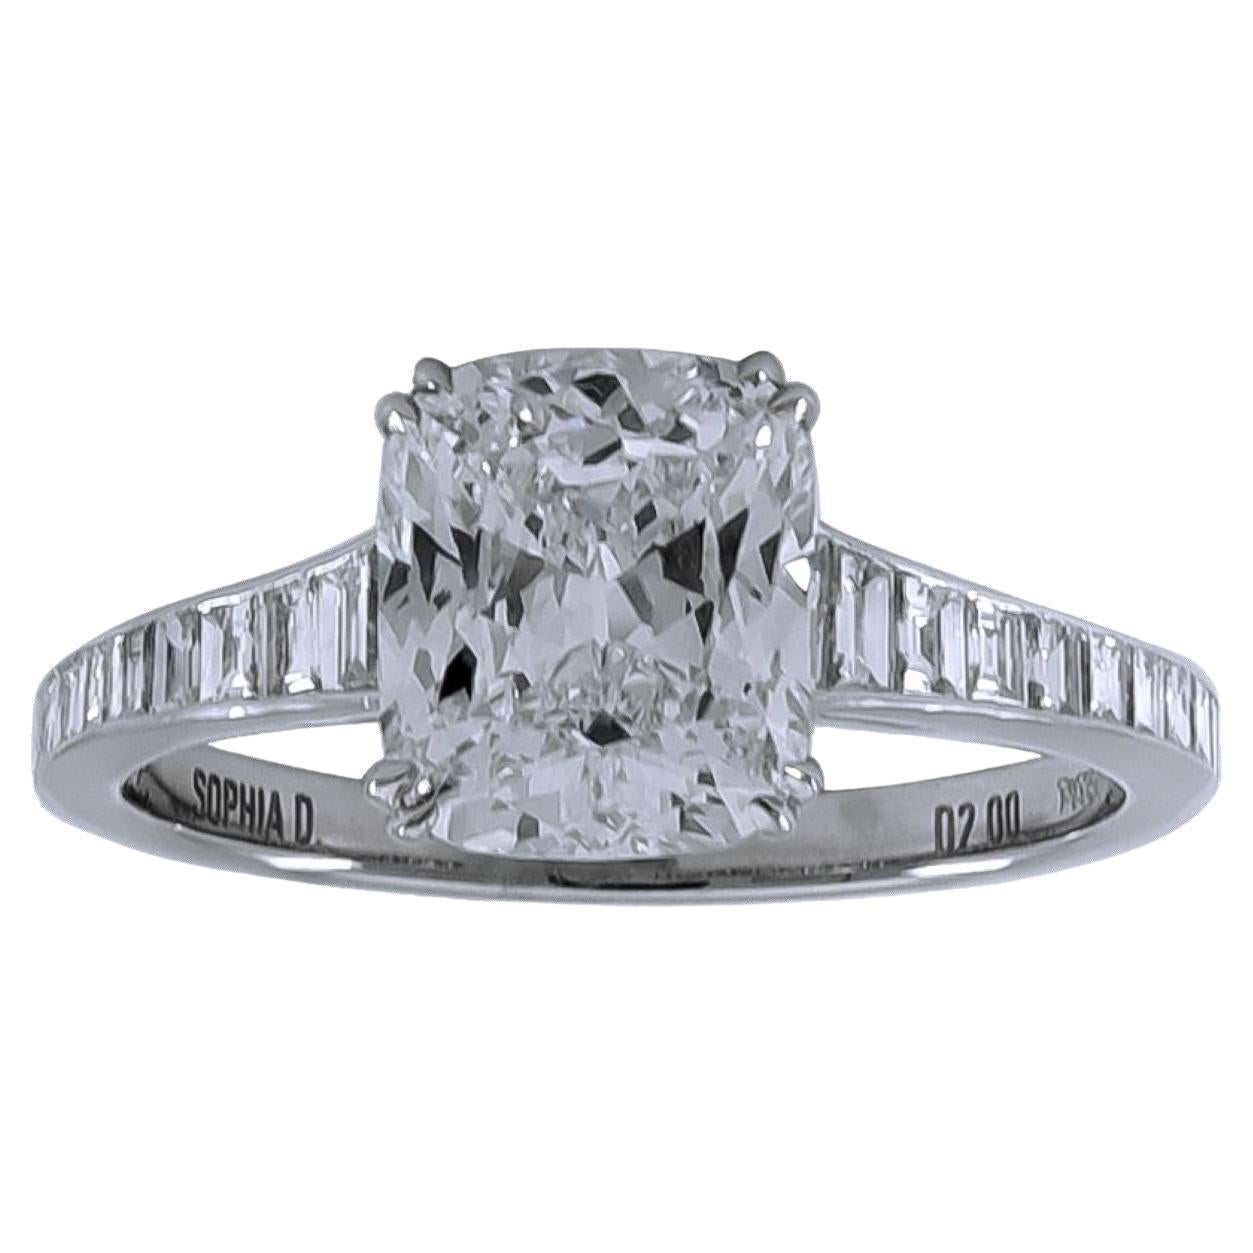 Sophia D. 2.00 Carat Diamond Engagement Ring in Platinum Setting For Sale